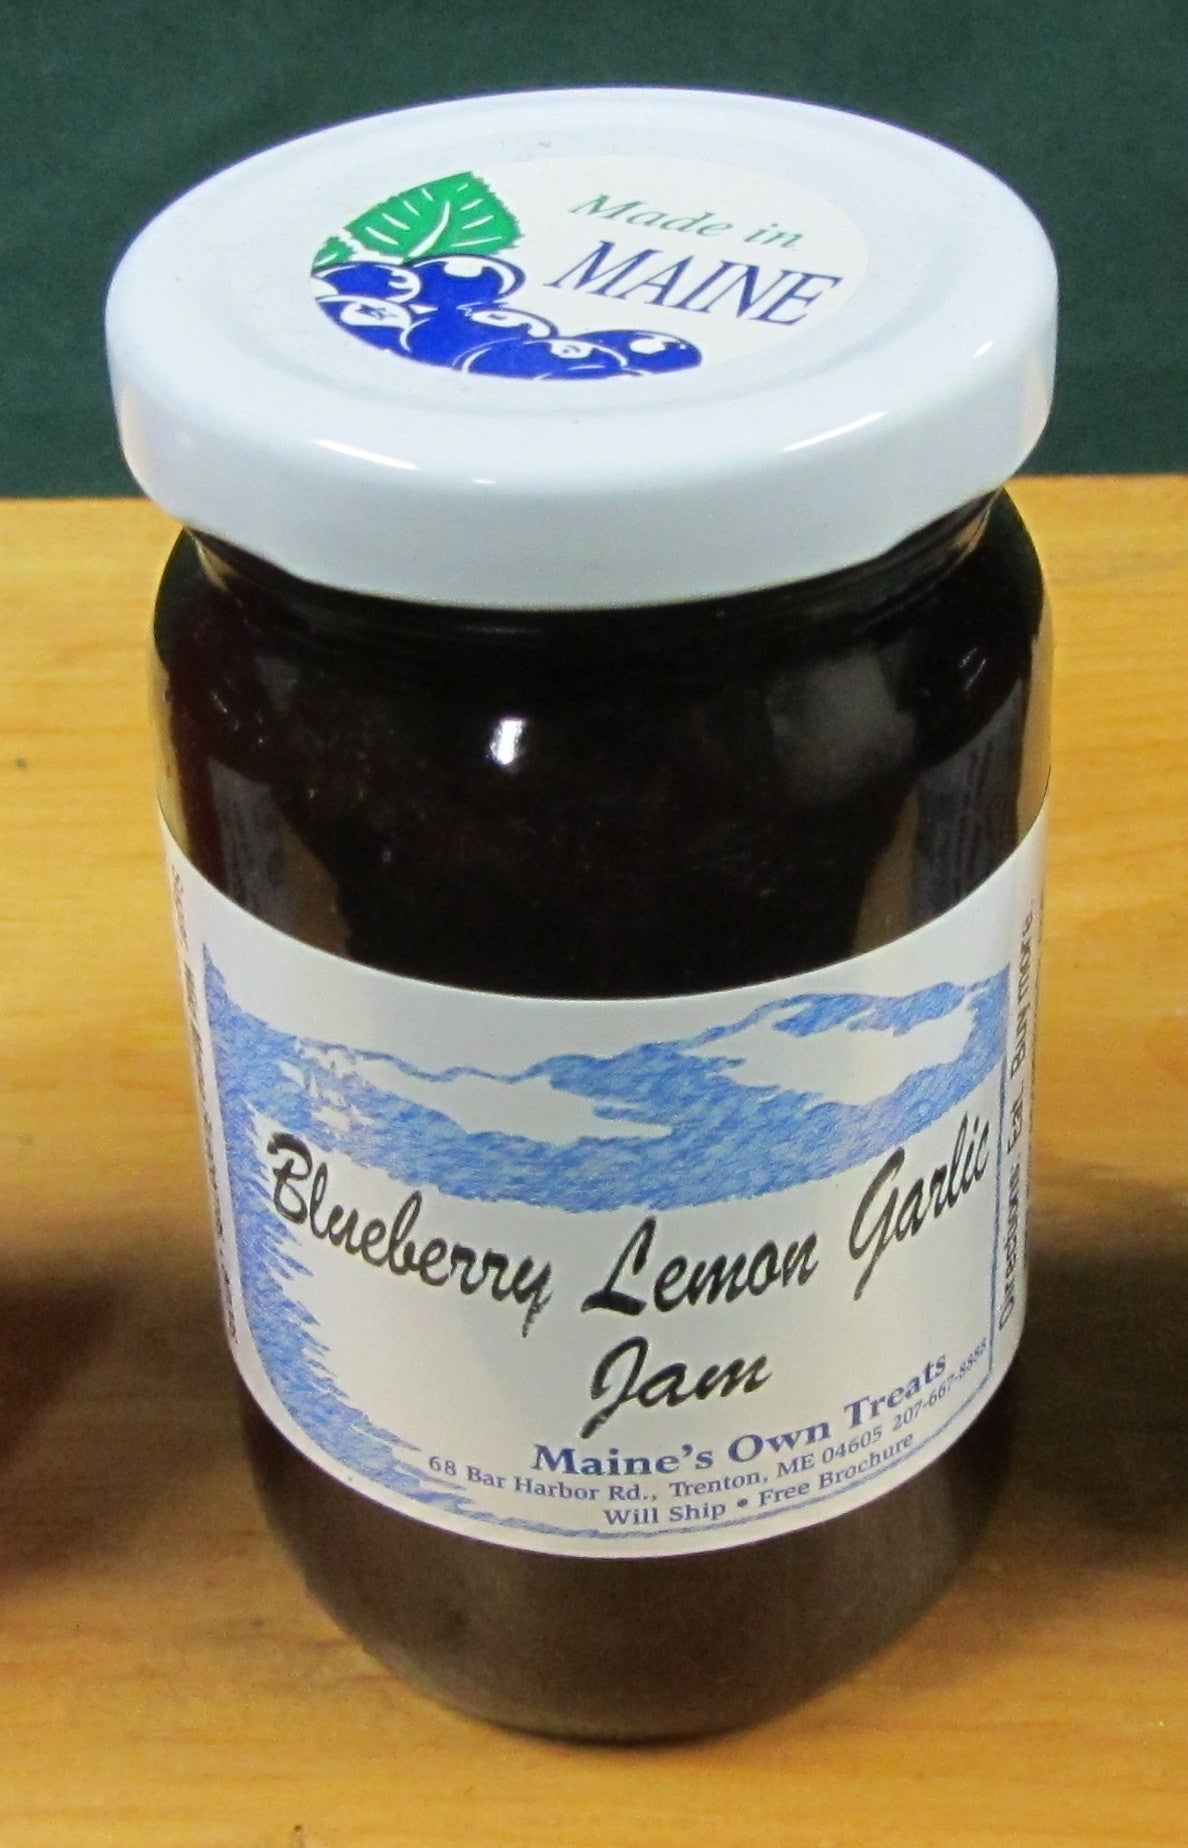 Blueberry Lemon Garlic Jam